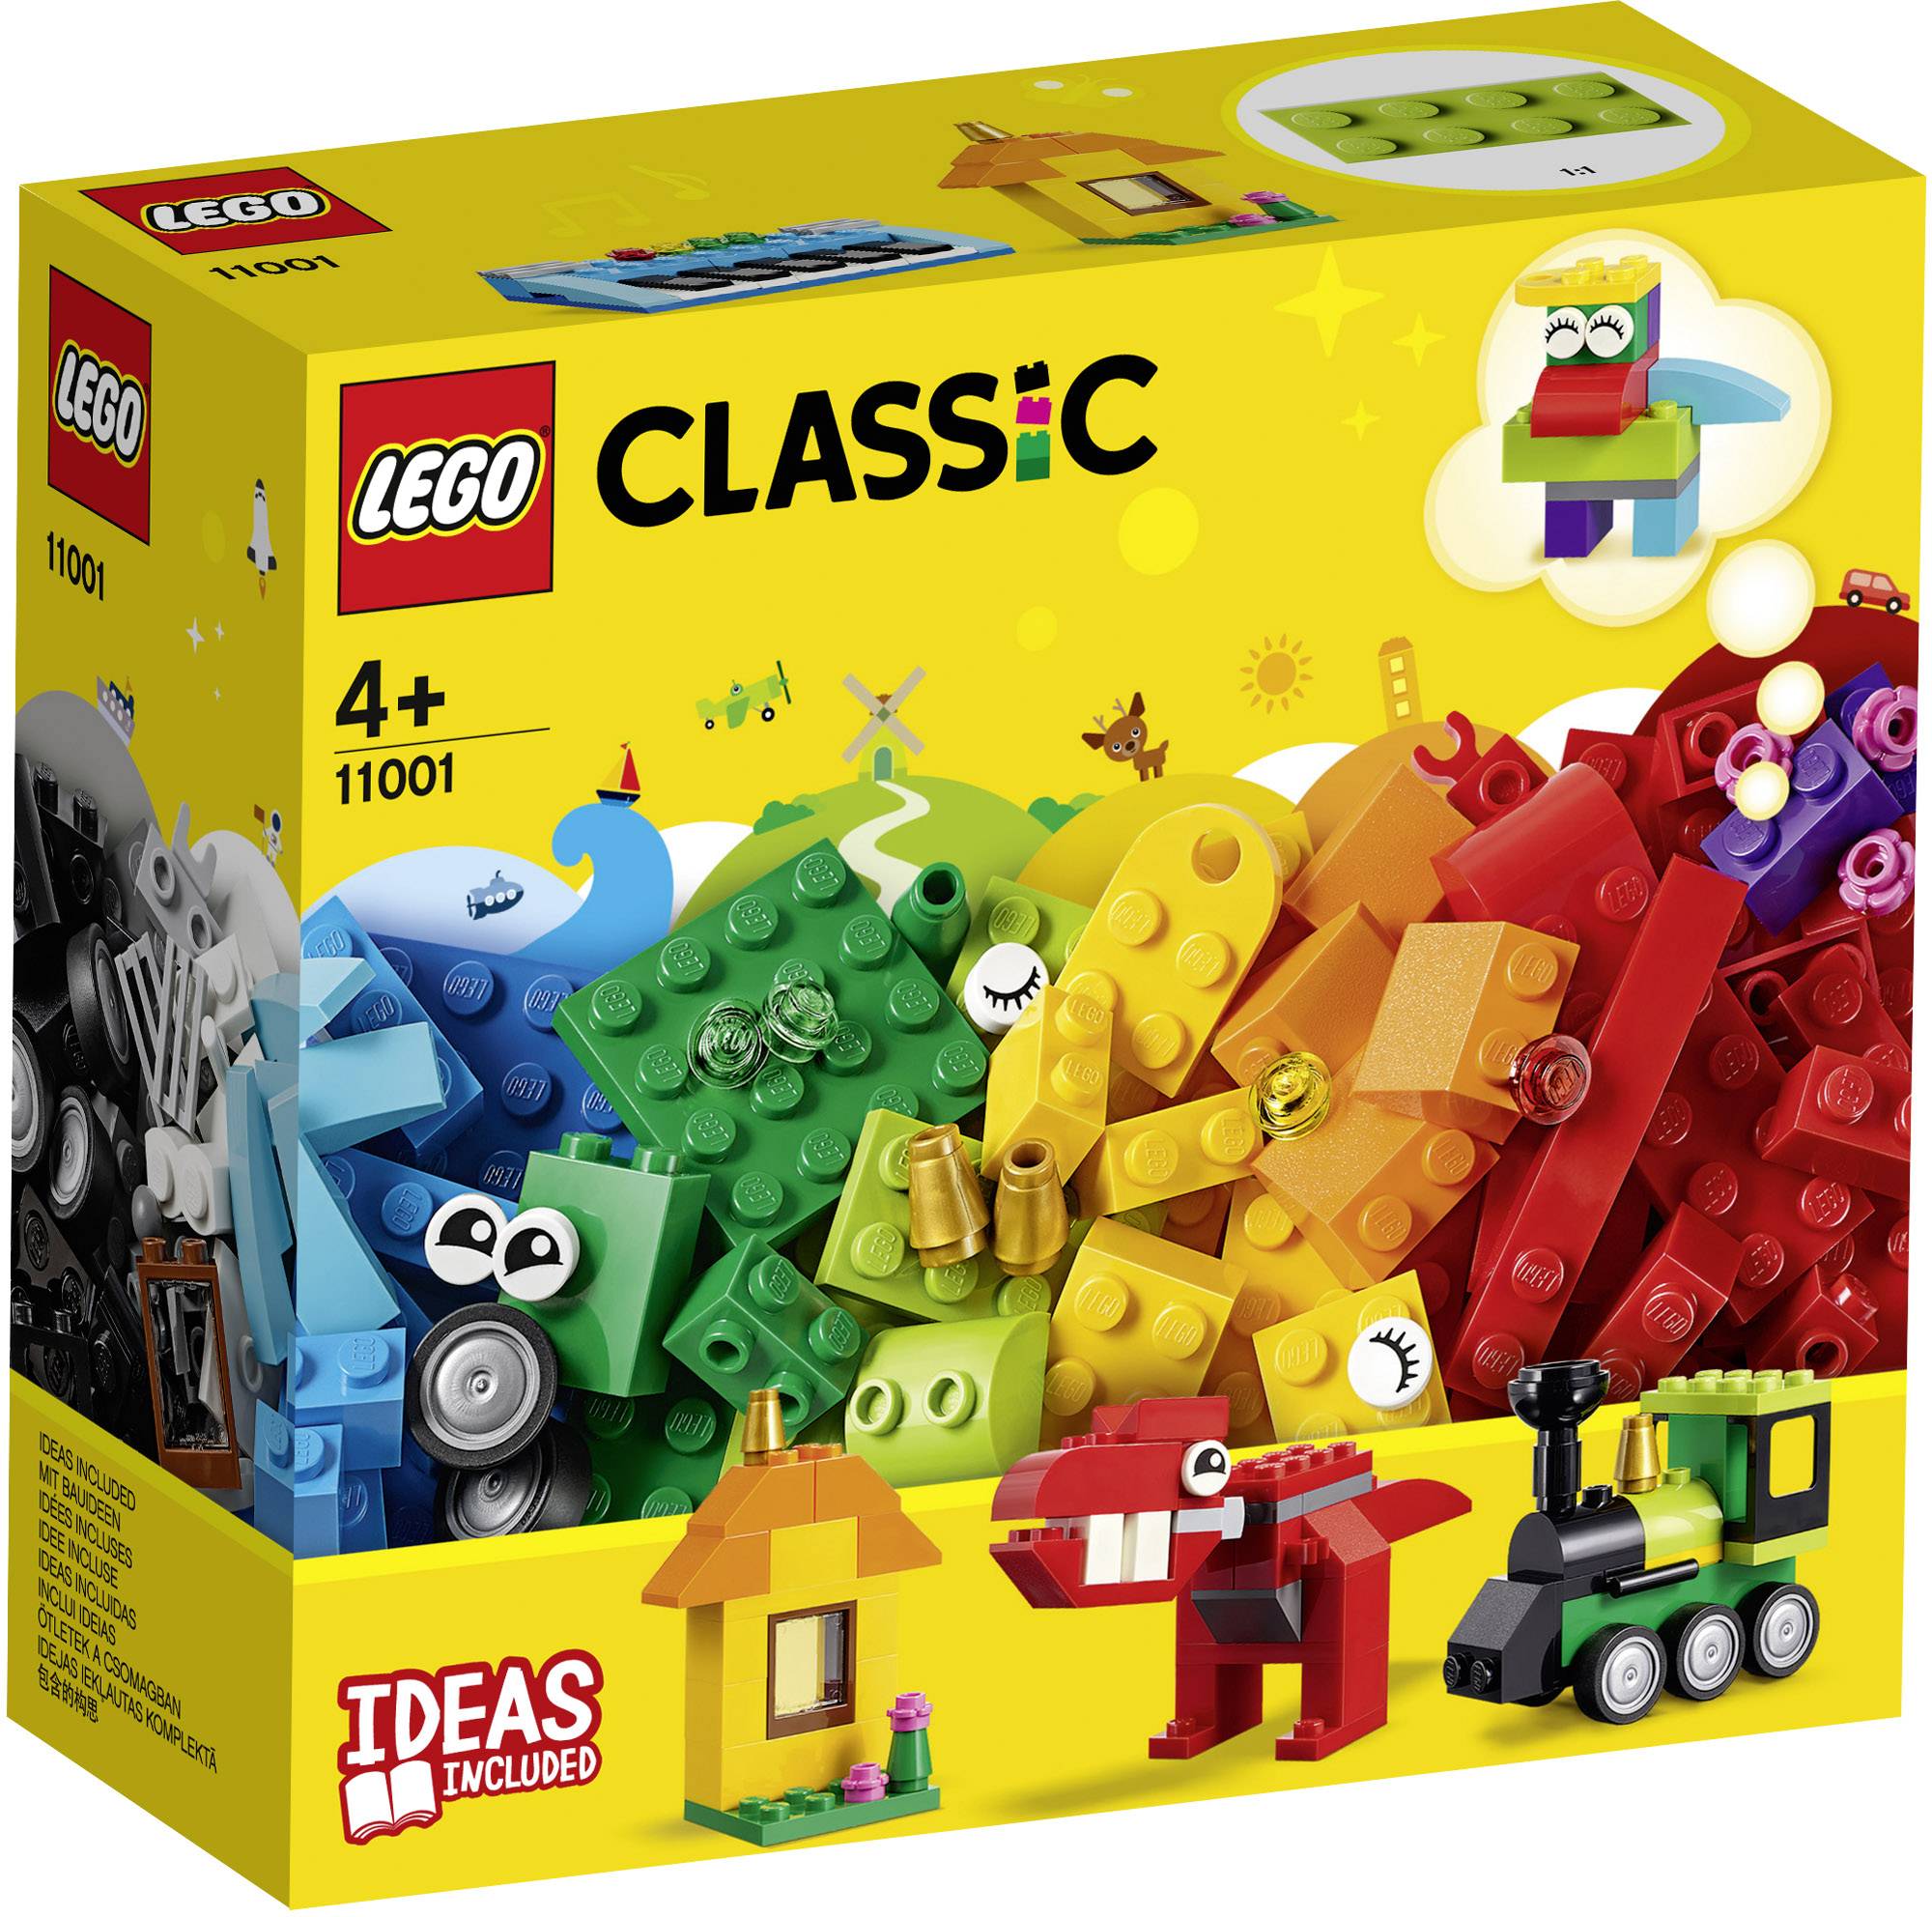 LEGO BRICKS AND IDEAS